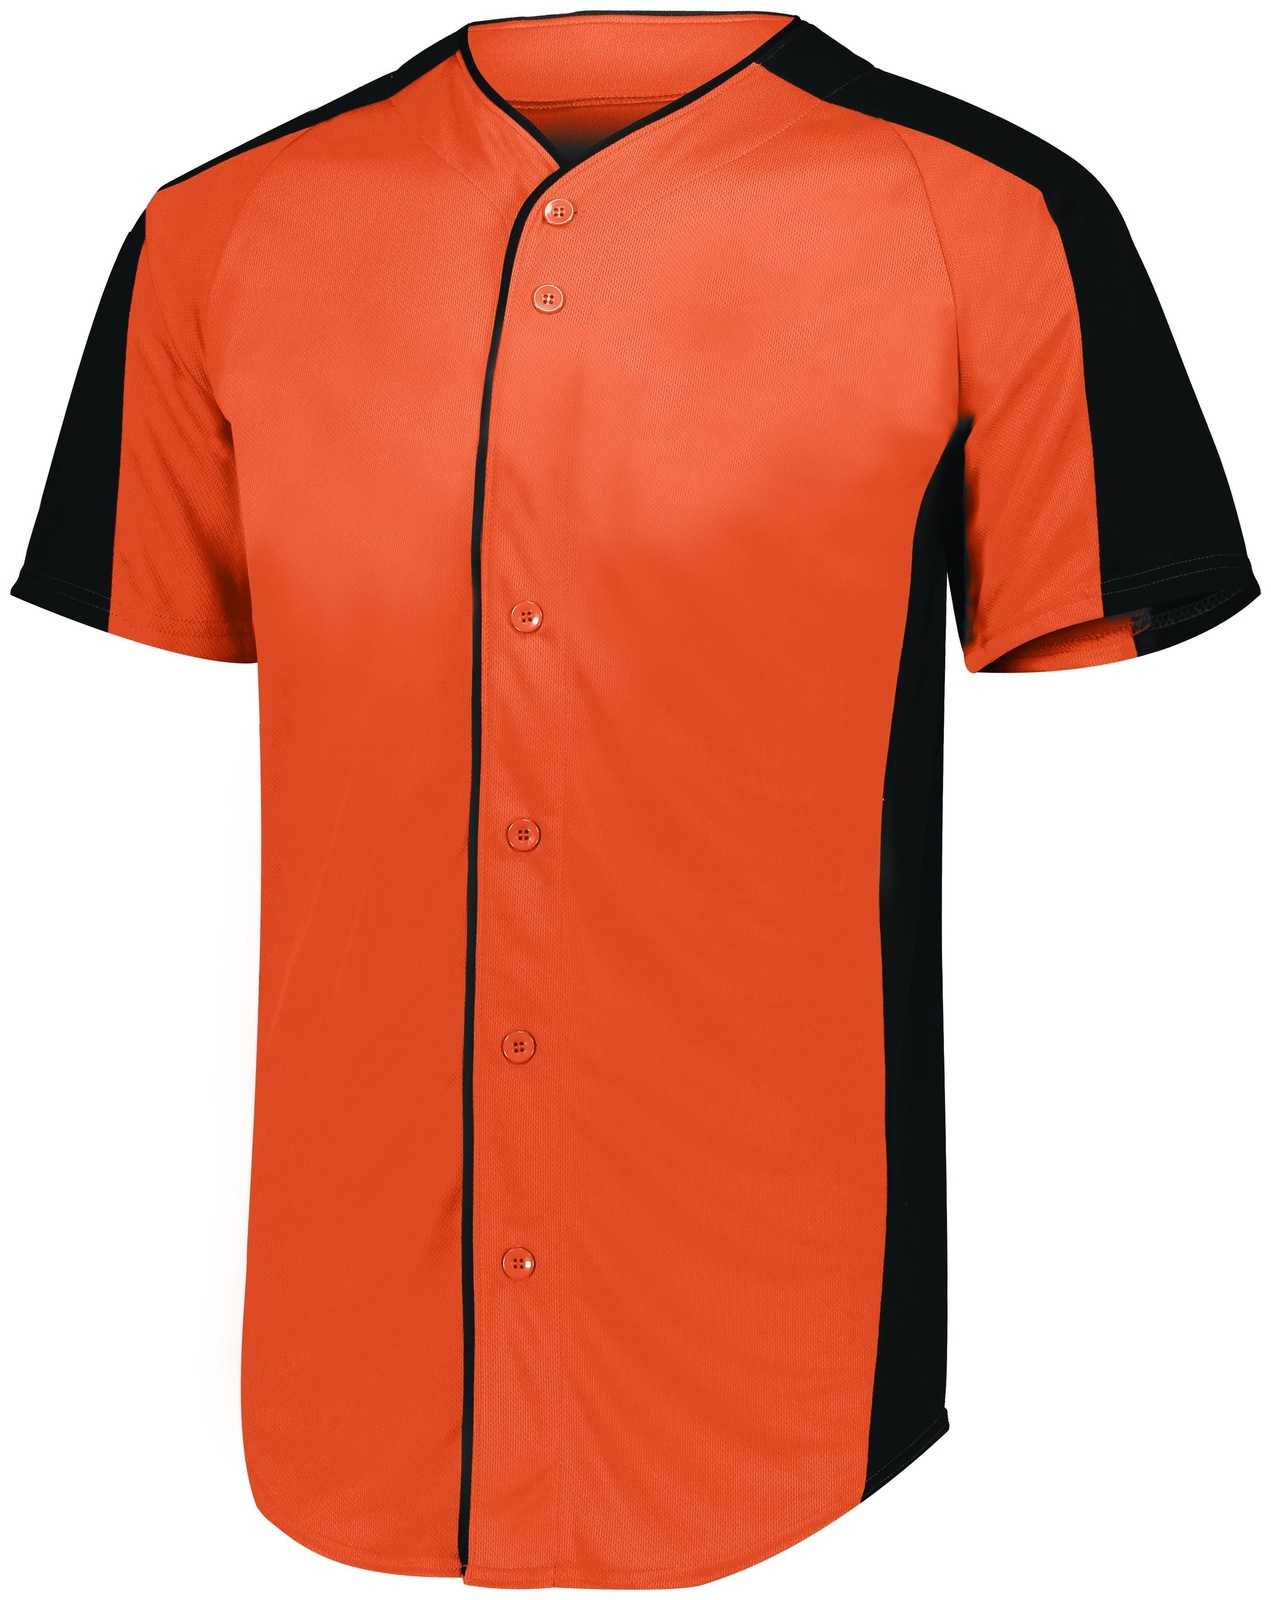 Augusta 1655 Full-Button Baseball Jersey - Orange Black - HIT a Double